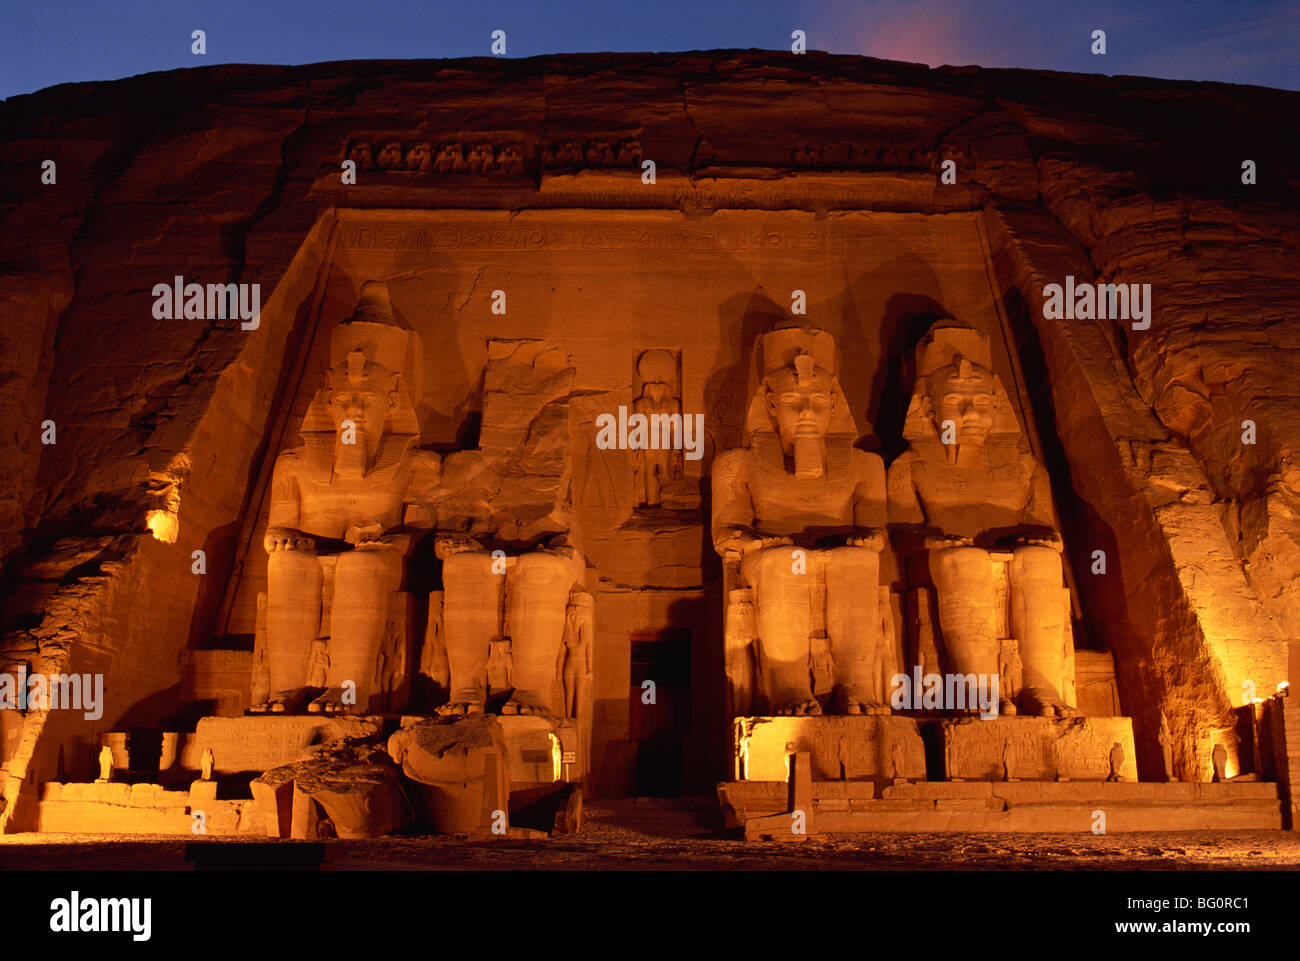 Colossi of Ramses II, floodlit, Great Temple of Ramses II, Abu Simbel, UNESCO World Heritage Site, Egypt, North Africa, Africa Stock Photo